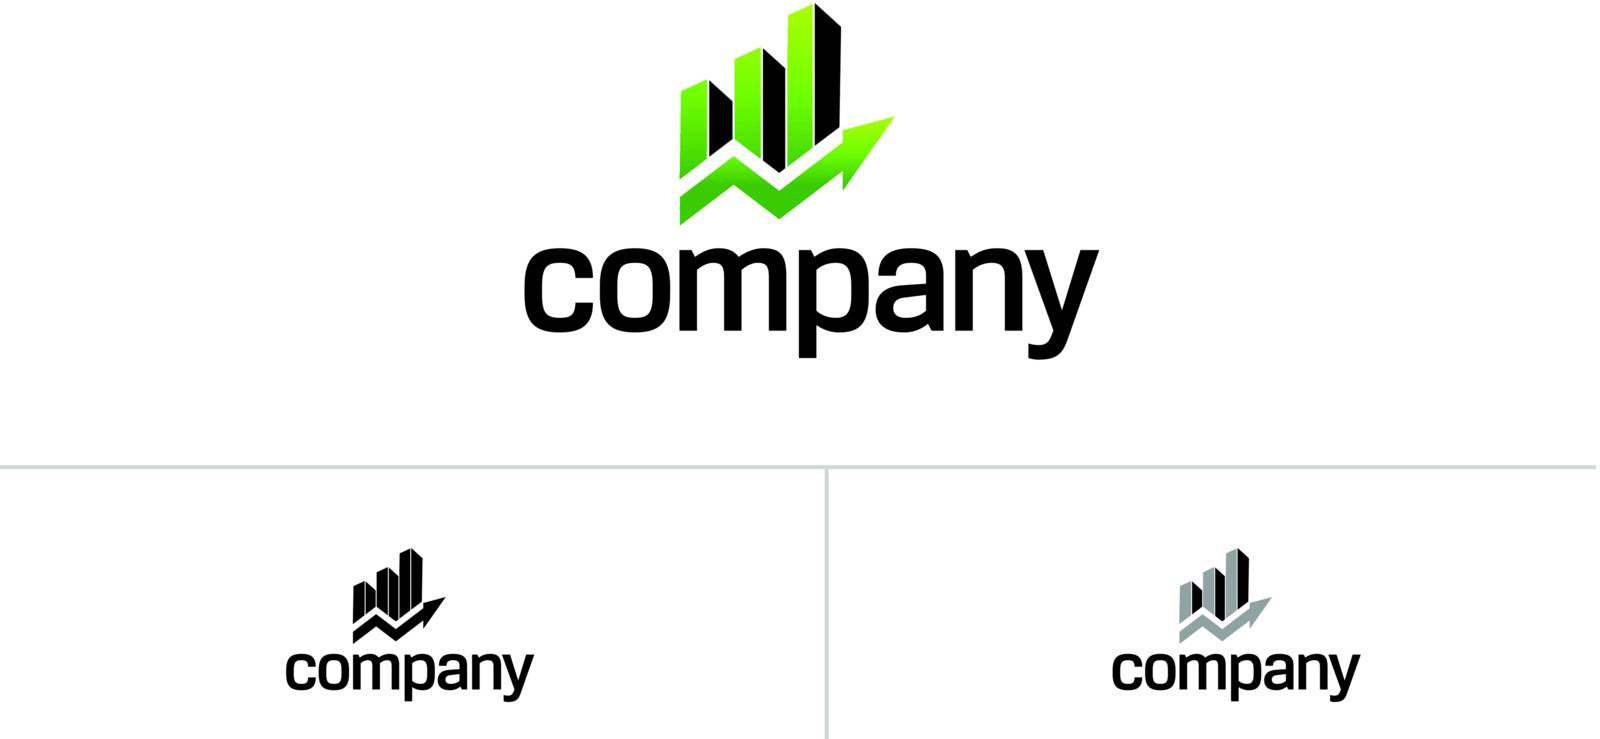 Logo for any business company.